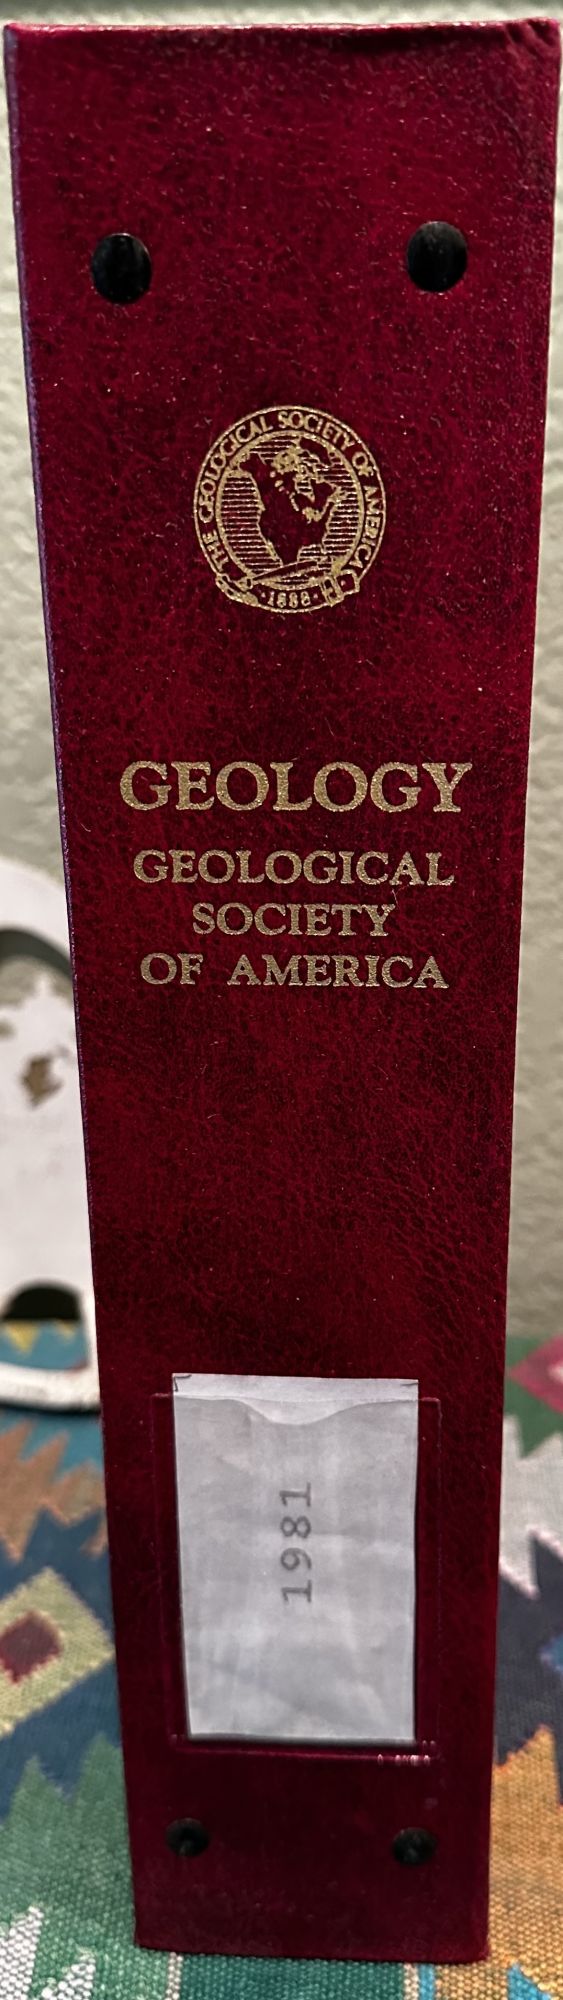 Geology Magazine January 1981 Vol 9 No. 1-12. Vernon E. Swanson.